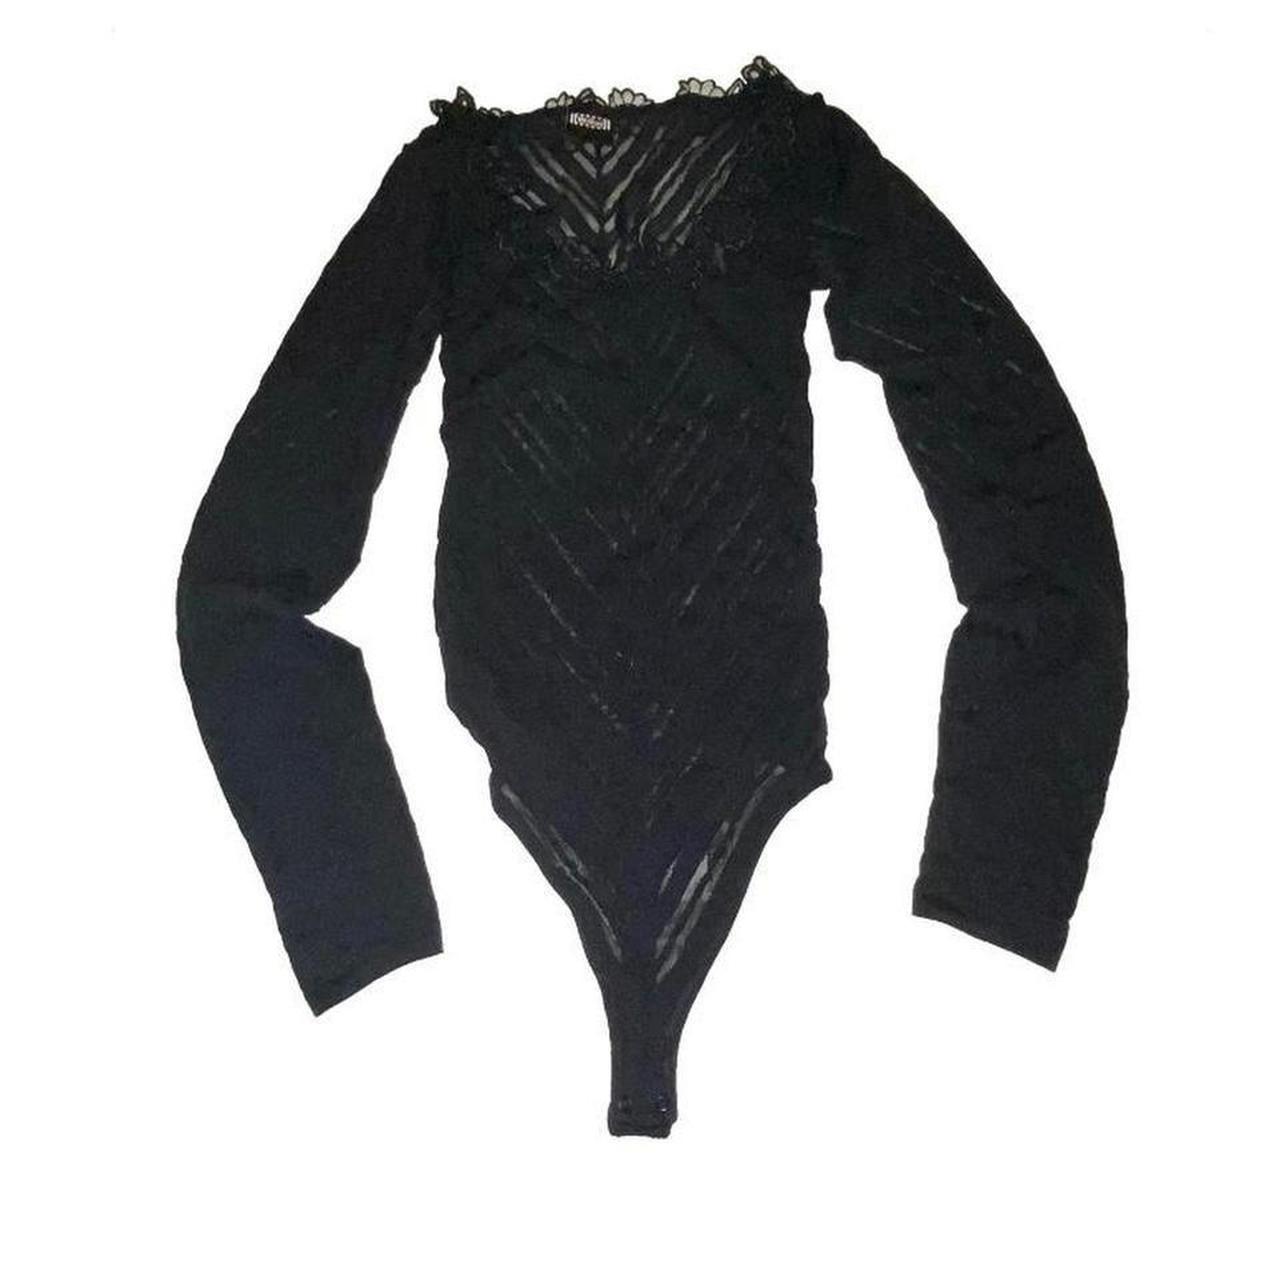 Wolford Women's Black Bodysuit